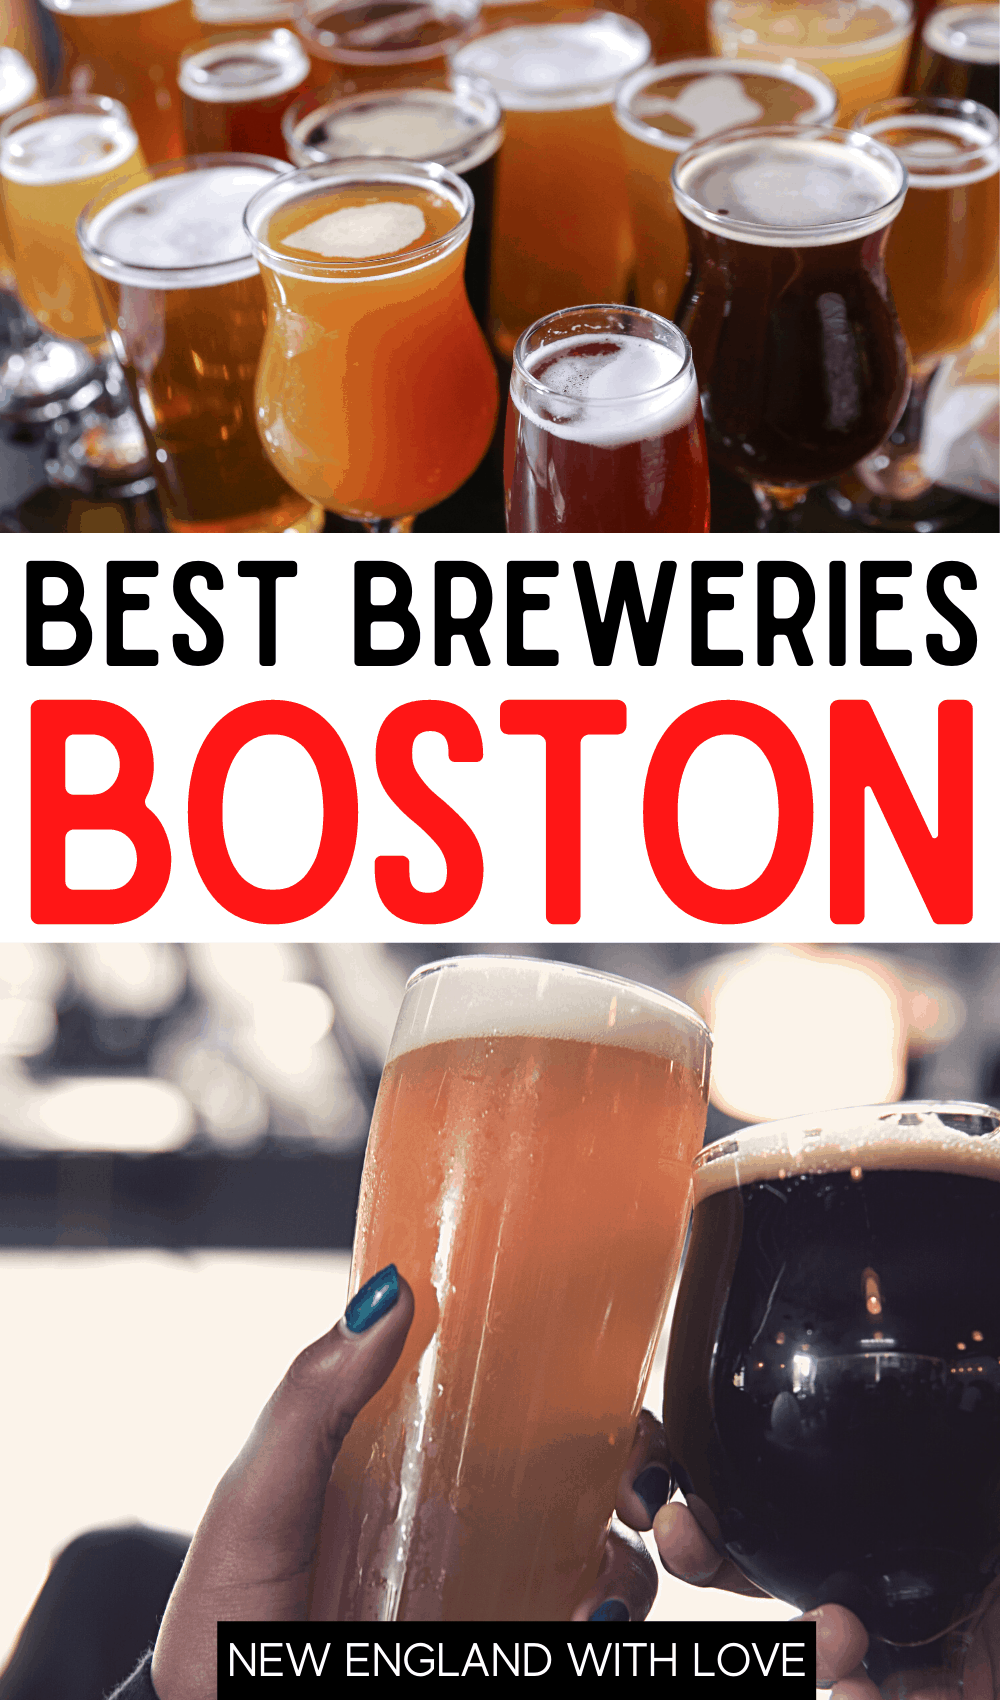 Pinterest graphic reading "BEST BREWERIES BOSTON"